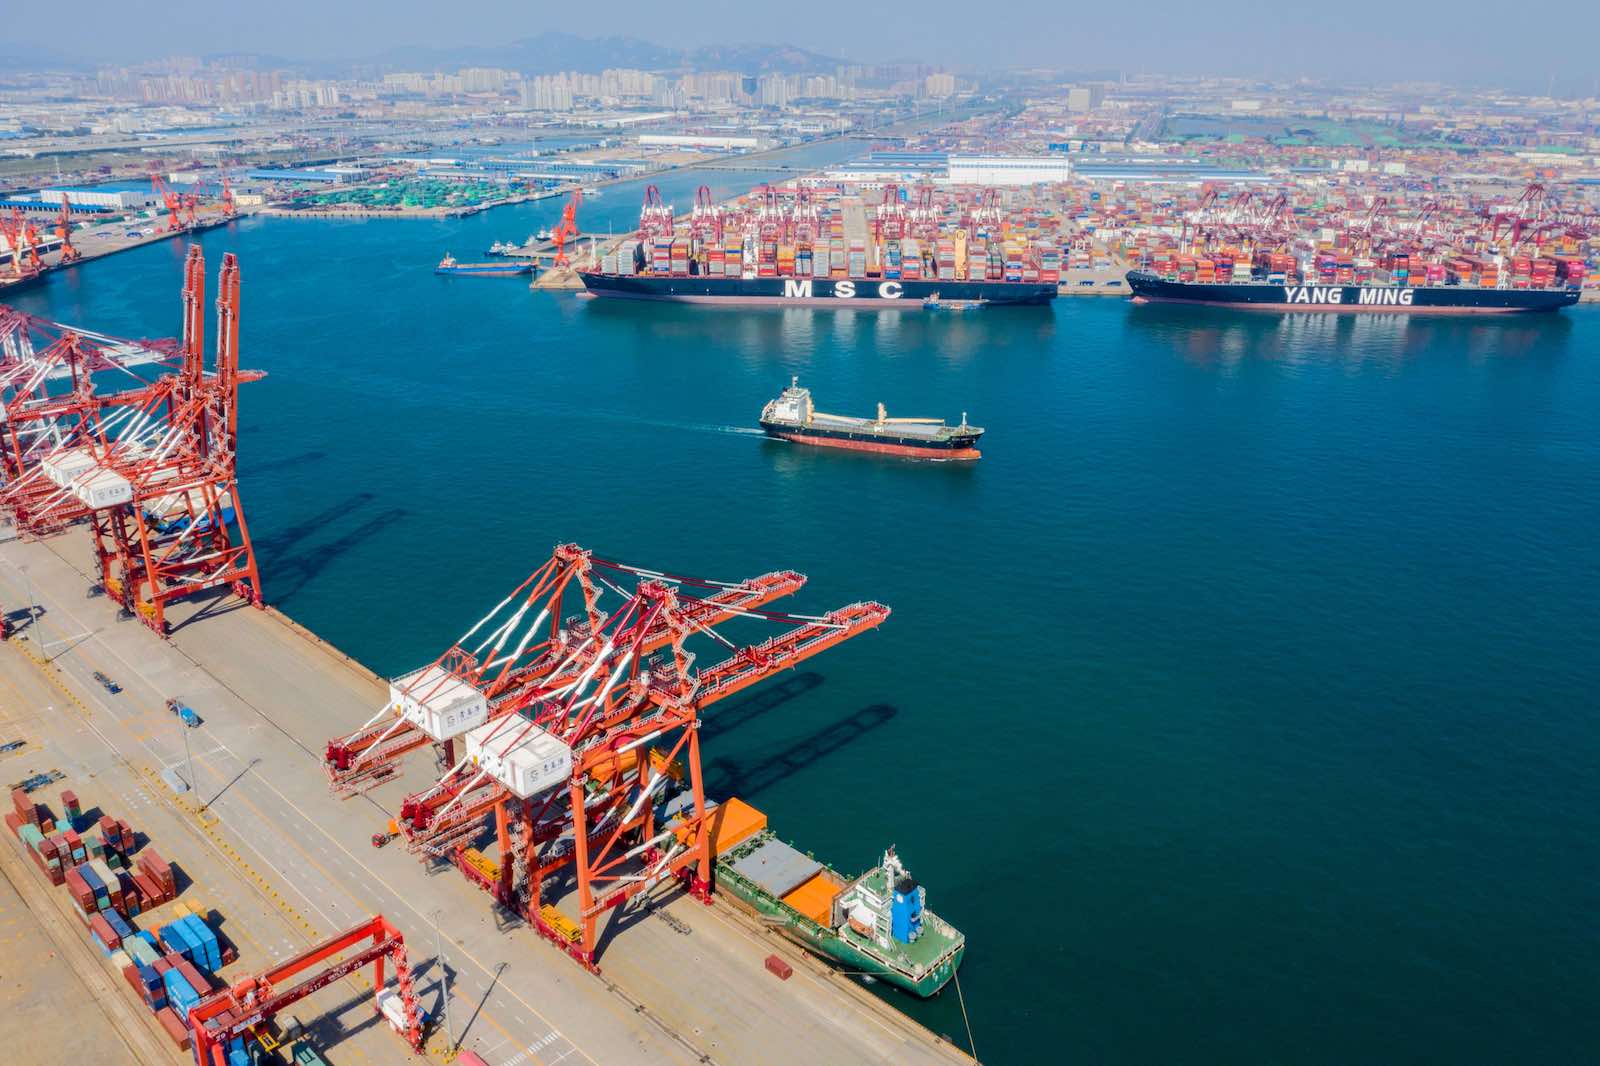 Qindao Port in China, 9 September 2020 (Han Jiajun/VCG via Getty Images)